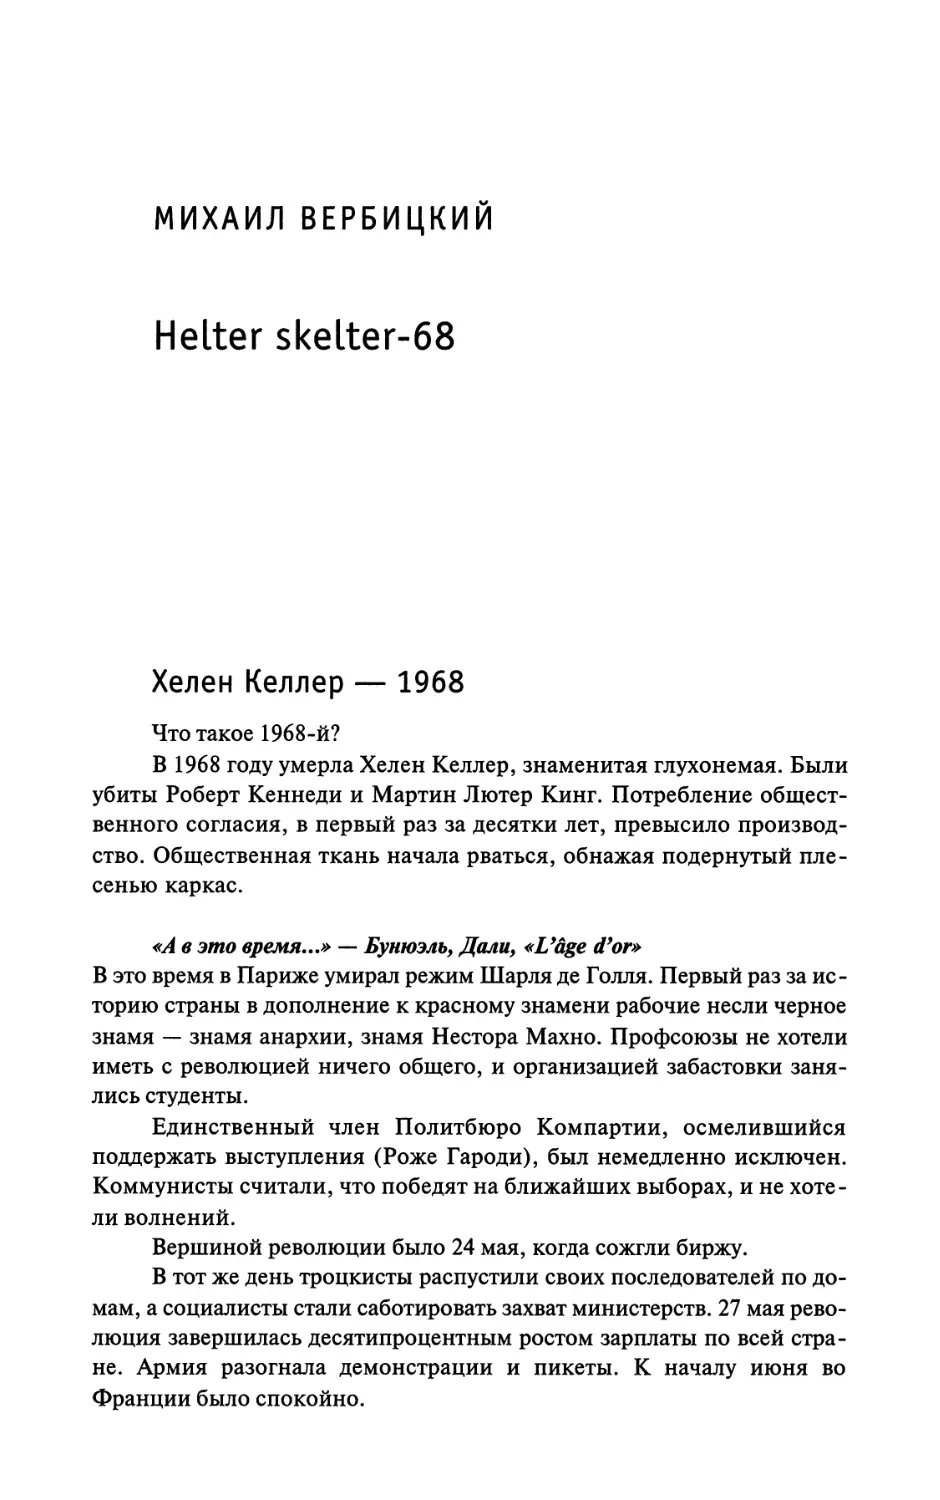 Михаил Вербицкий. Helter skelter-68